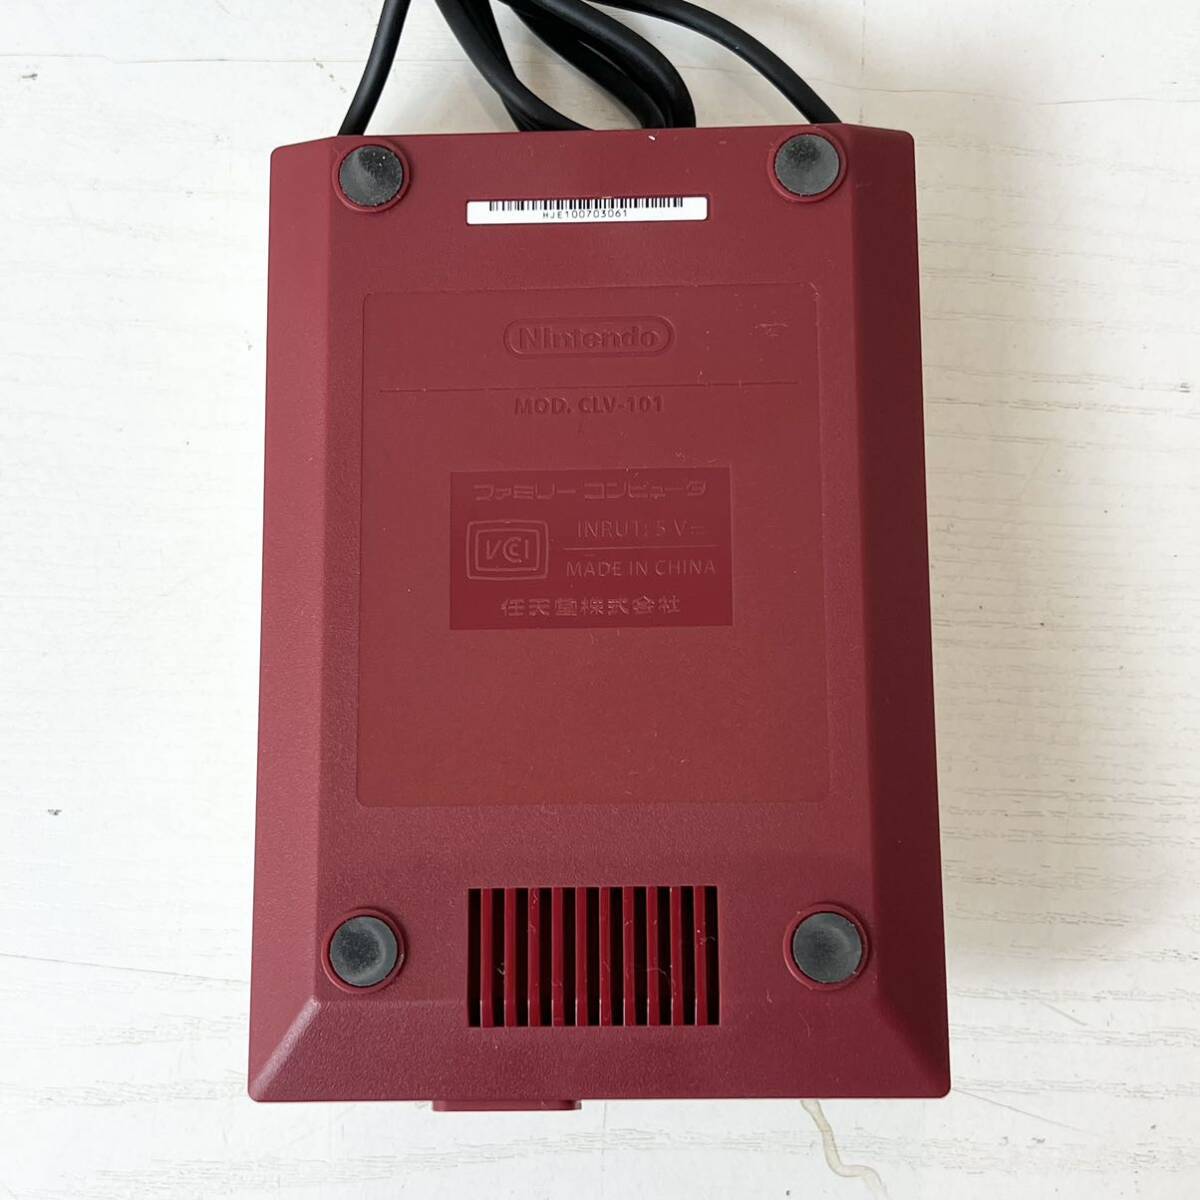 255* secondhand goods Nintendo Classic Mini Family computer CLV-101 operation verification ending *